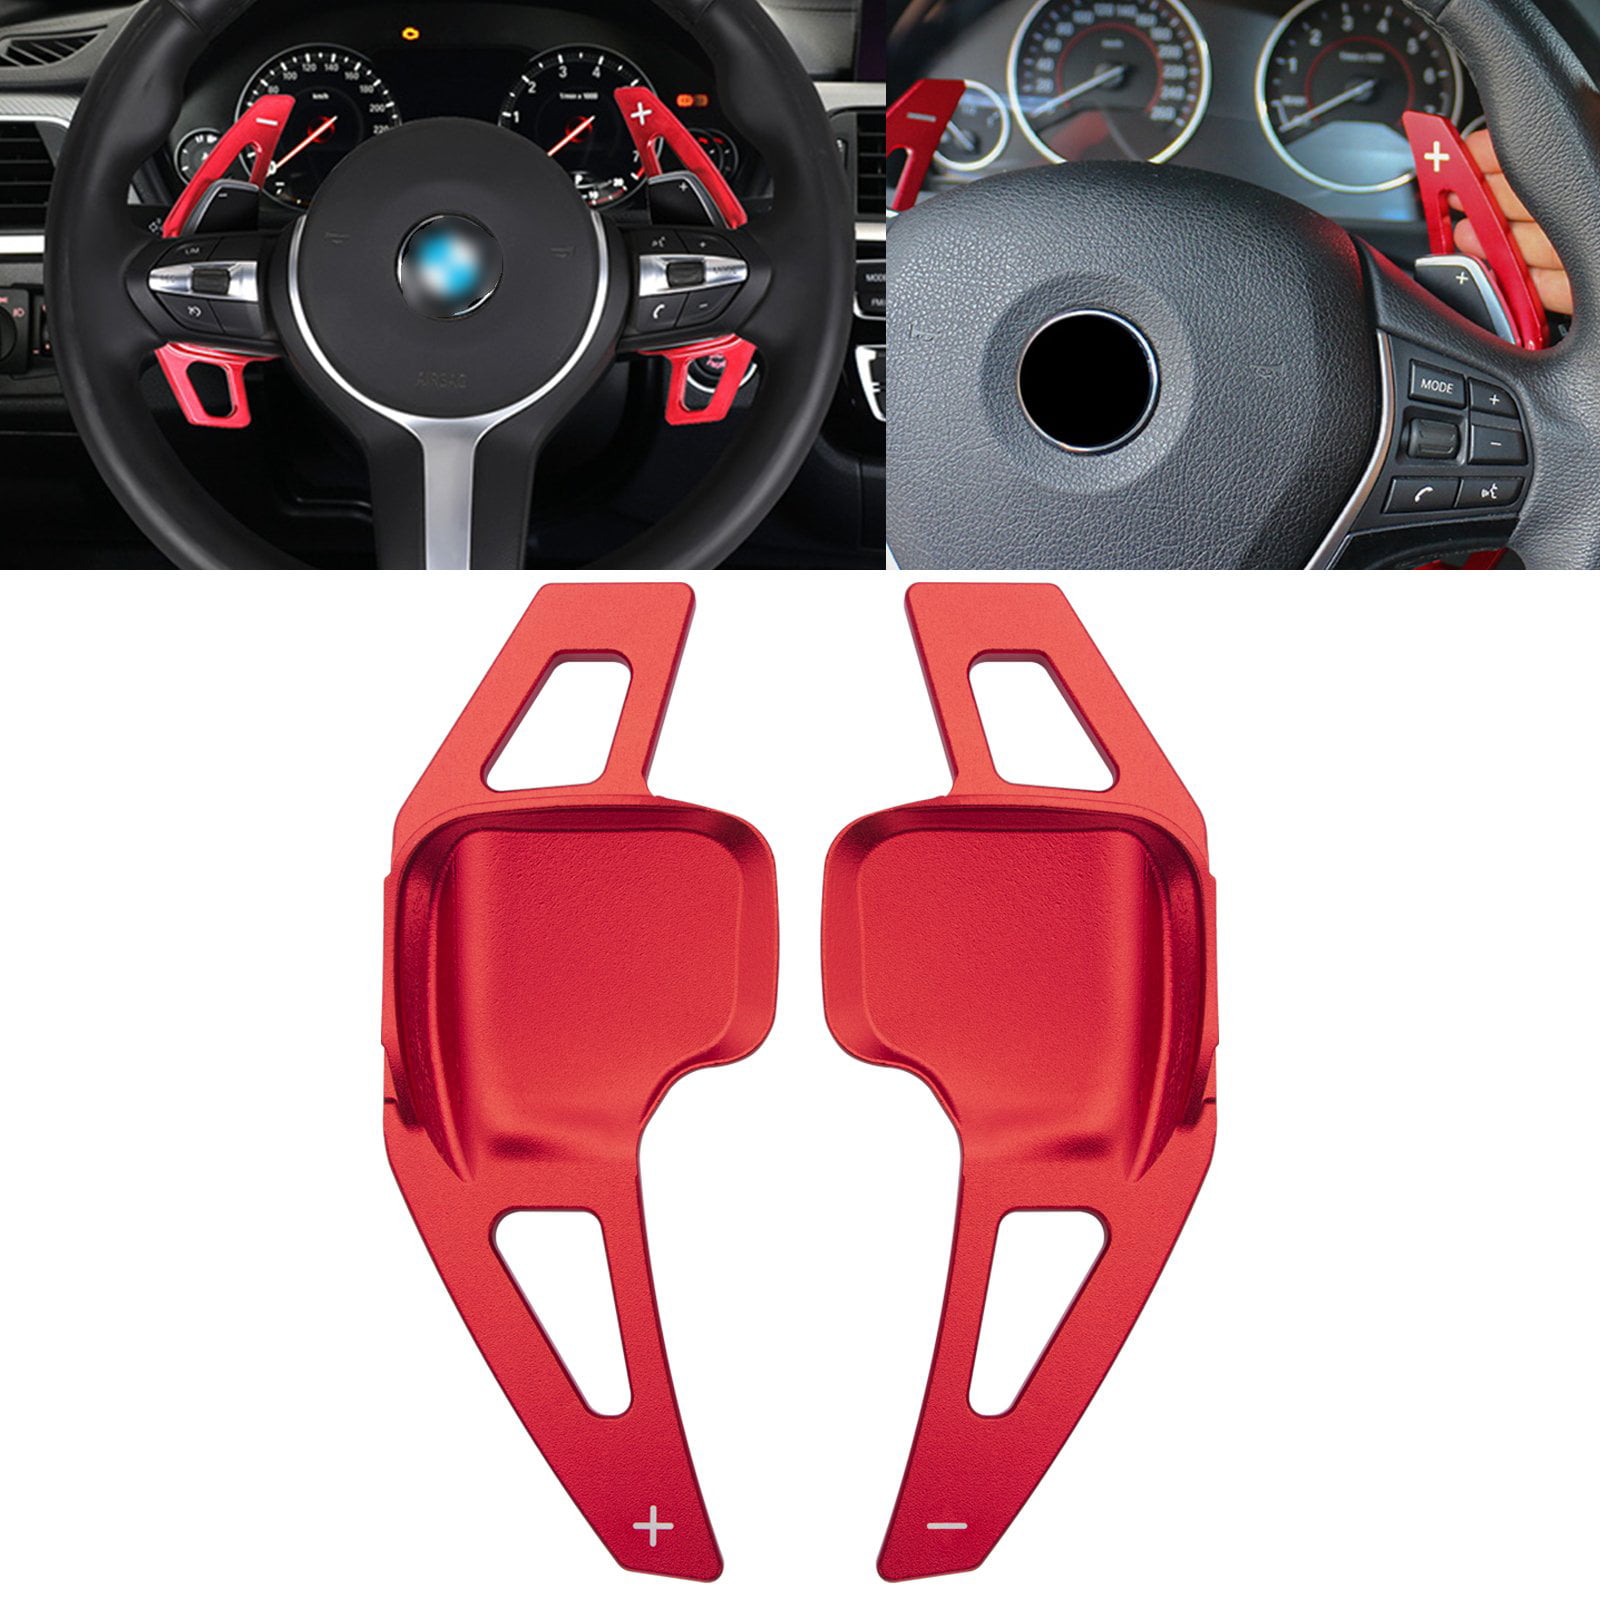 Steering Wheel Shift Paddle Shifter Transfer Aluminum Alloy Extension Blades Interior Trim Cover for BMW 2 3 4 X1 X2 X3 X4 X5 X6 series F22 F23 F30 F31 F33 F34 F36 F32 F15 F16 F25 F26 F48 F39